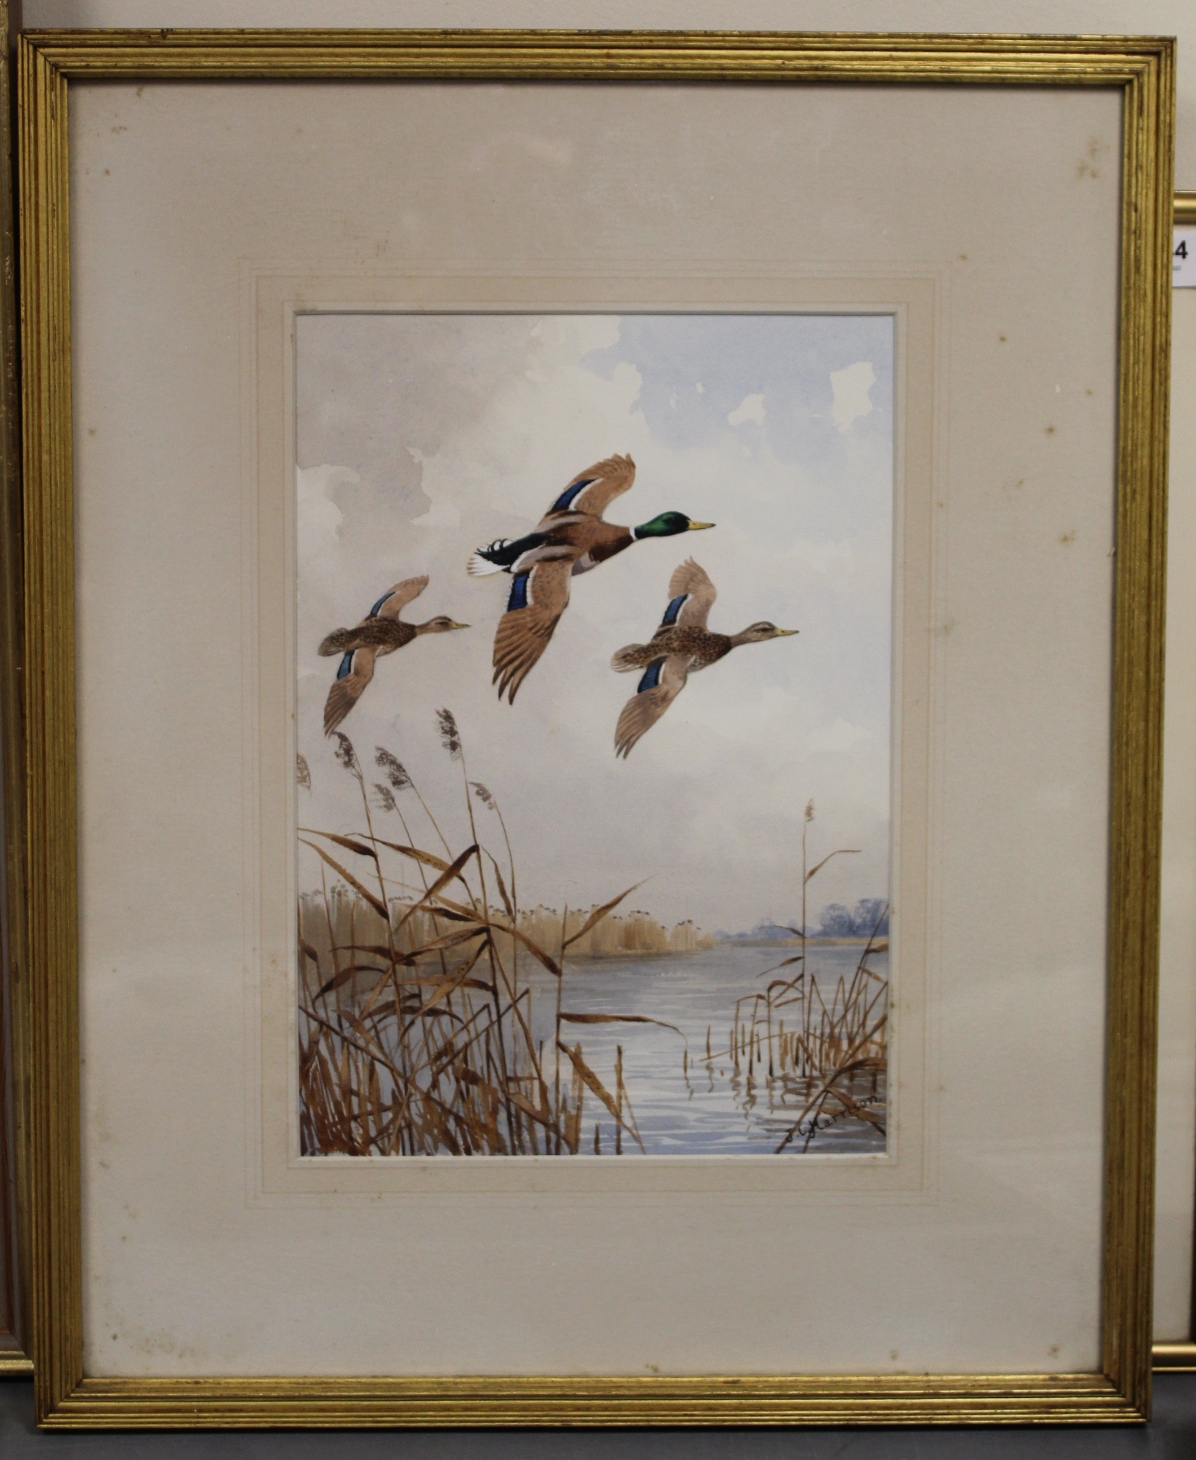 John Cyril Harrison (1898-1985).   "Over the broad - (Mallard)" - ducks in flight. Watercolour. 52. - Image 4 of 8